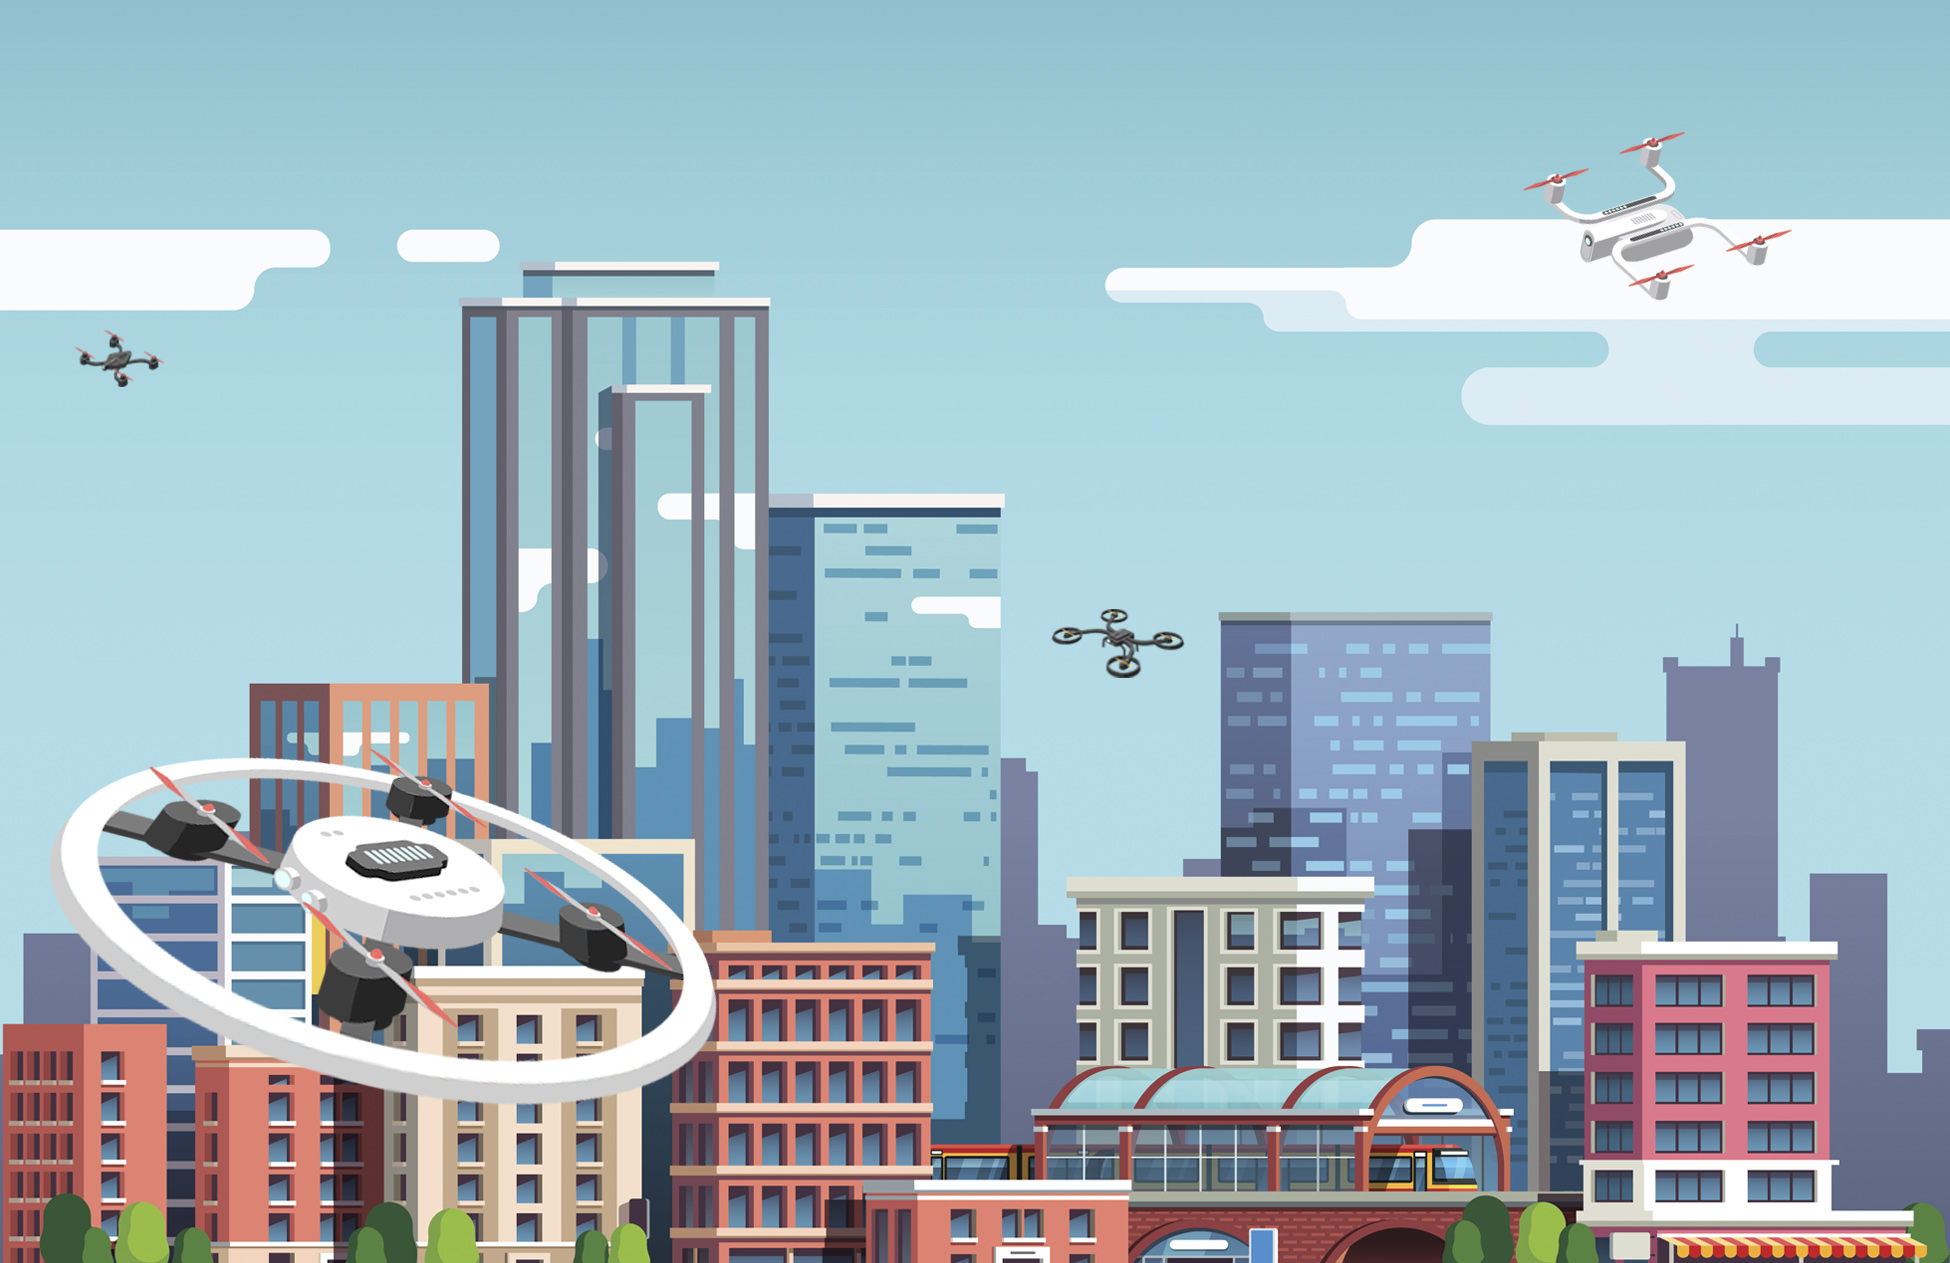 Artist vector graphic of drones in flight in a city.